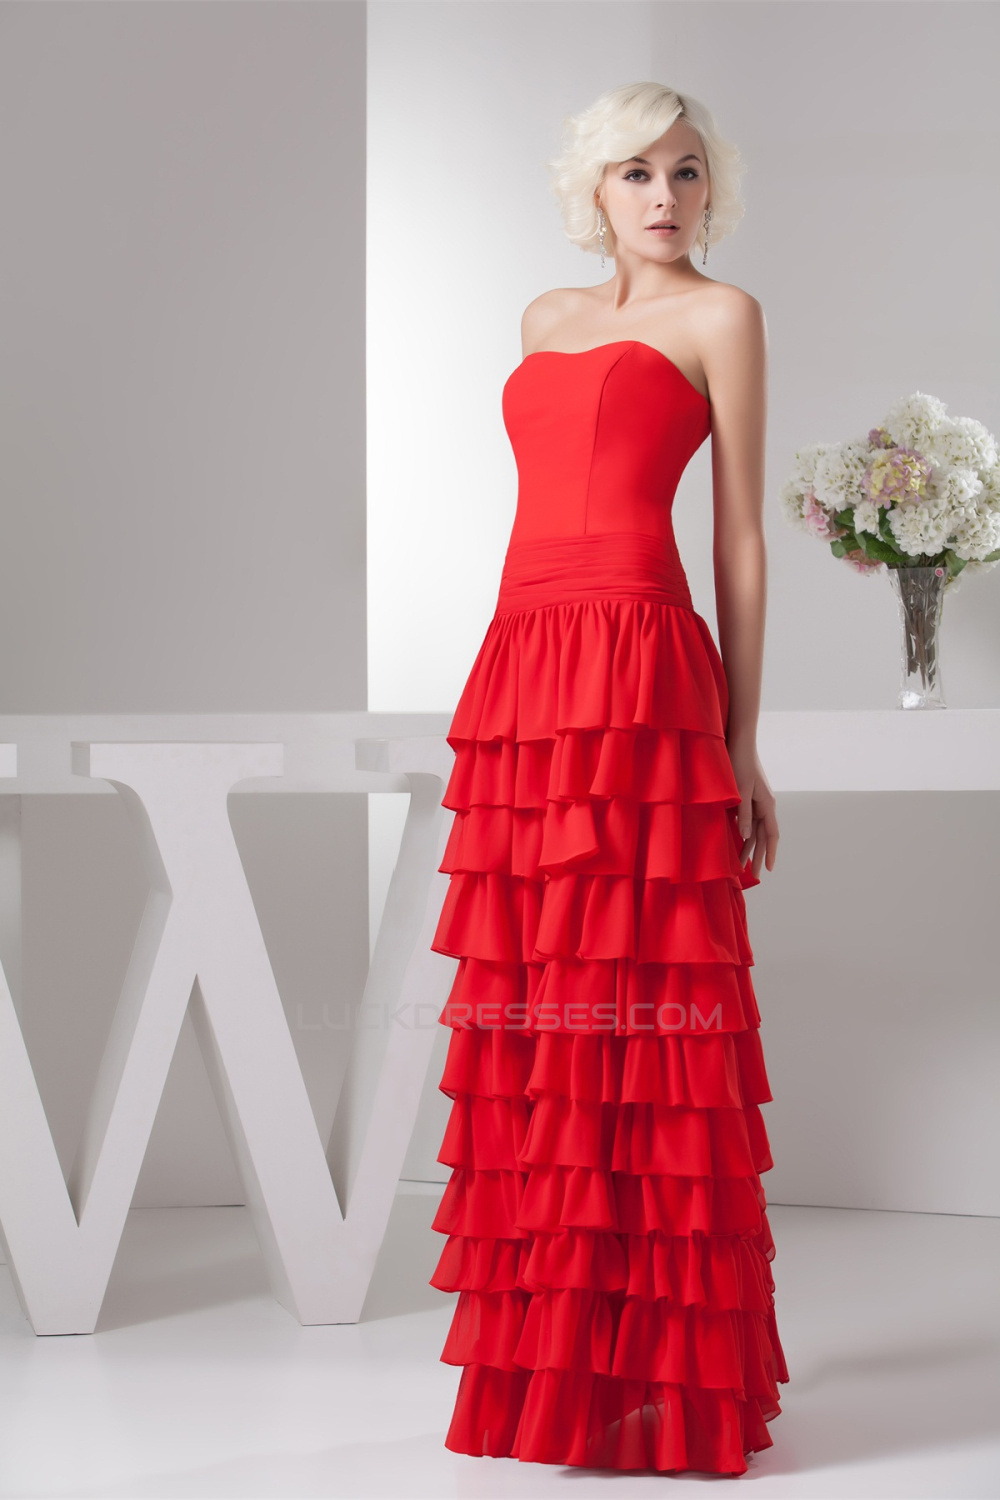 Sheathcolumn Strapless Chiffon Long Red Prom Evening Formal Dresses 02020505 